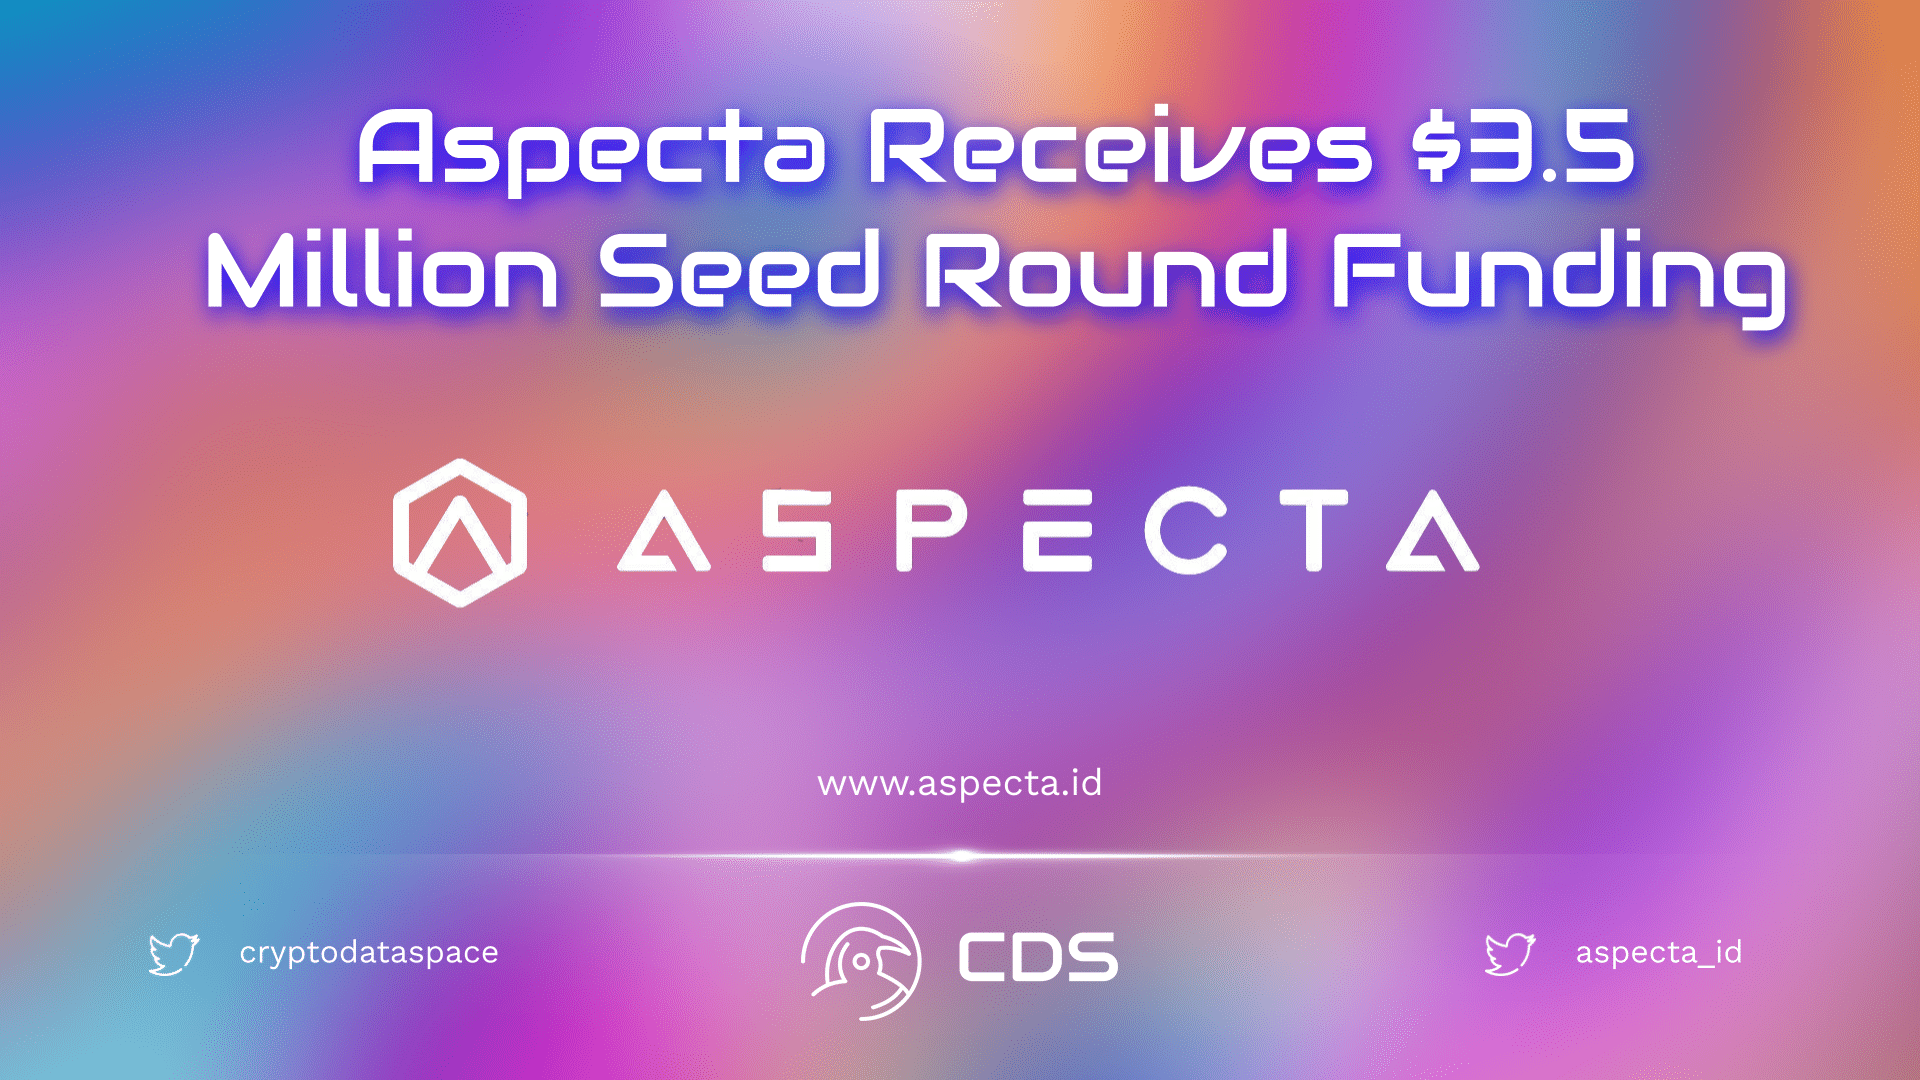 Aspecta Receives $3.5 Million Seed Round Funding